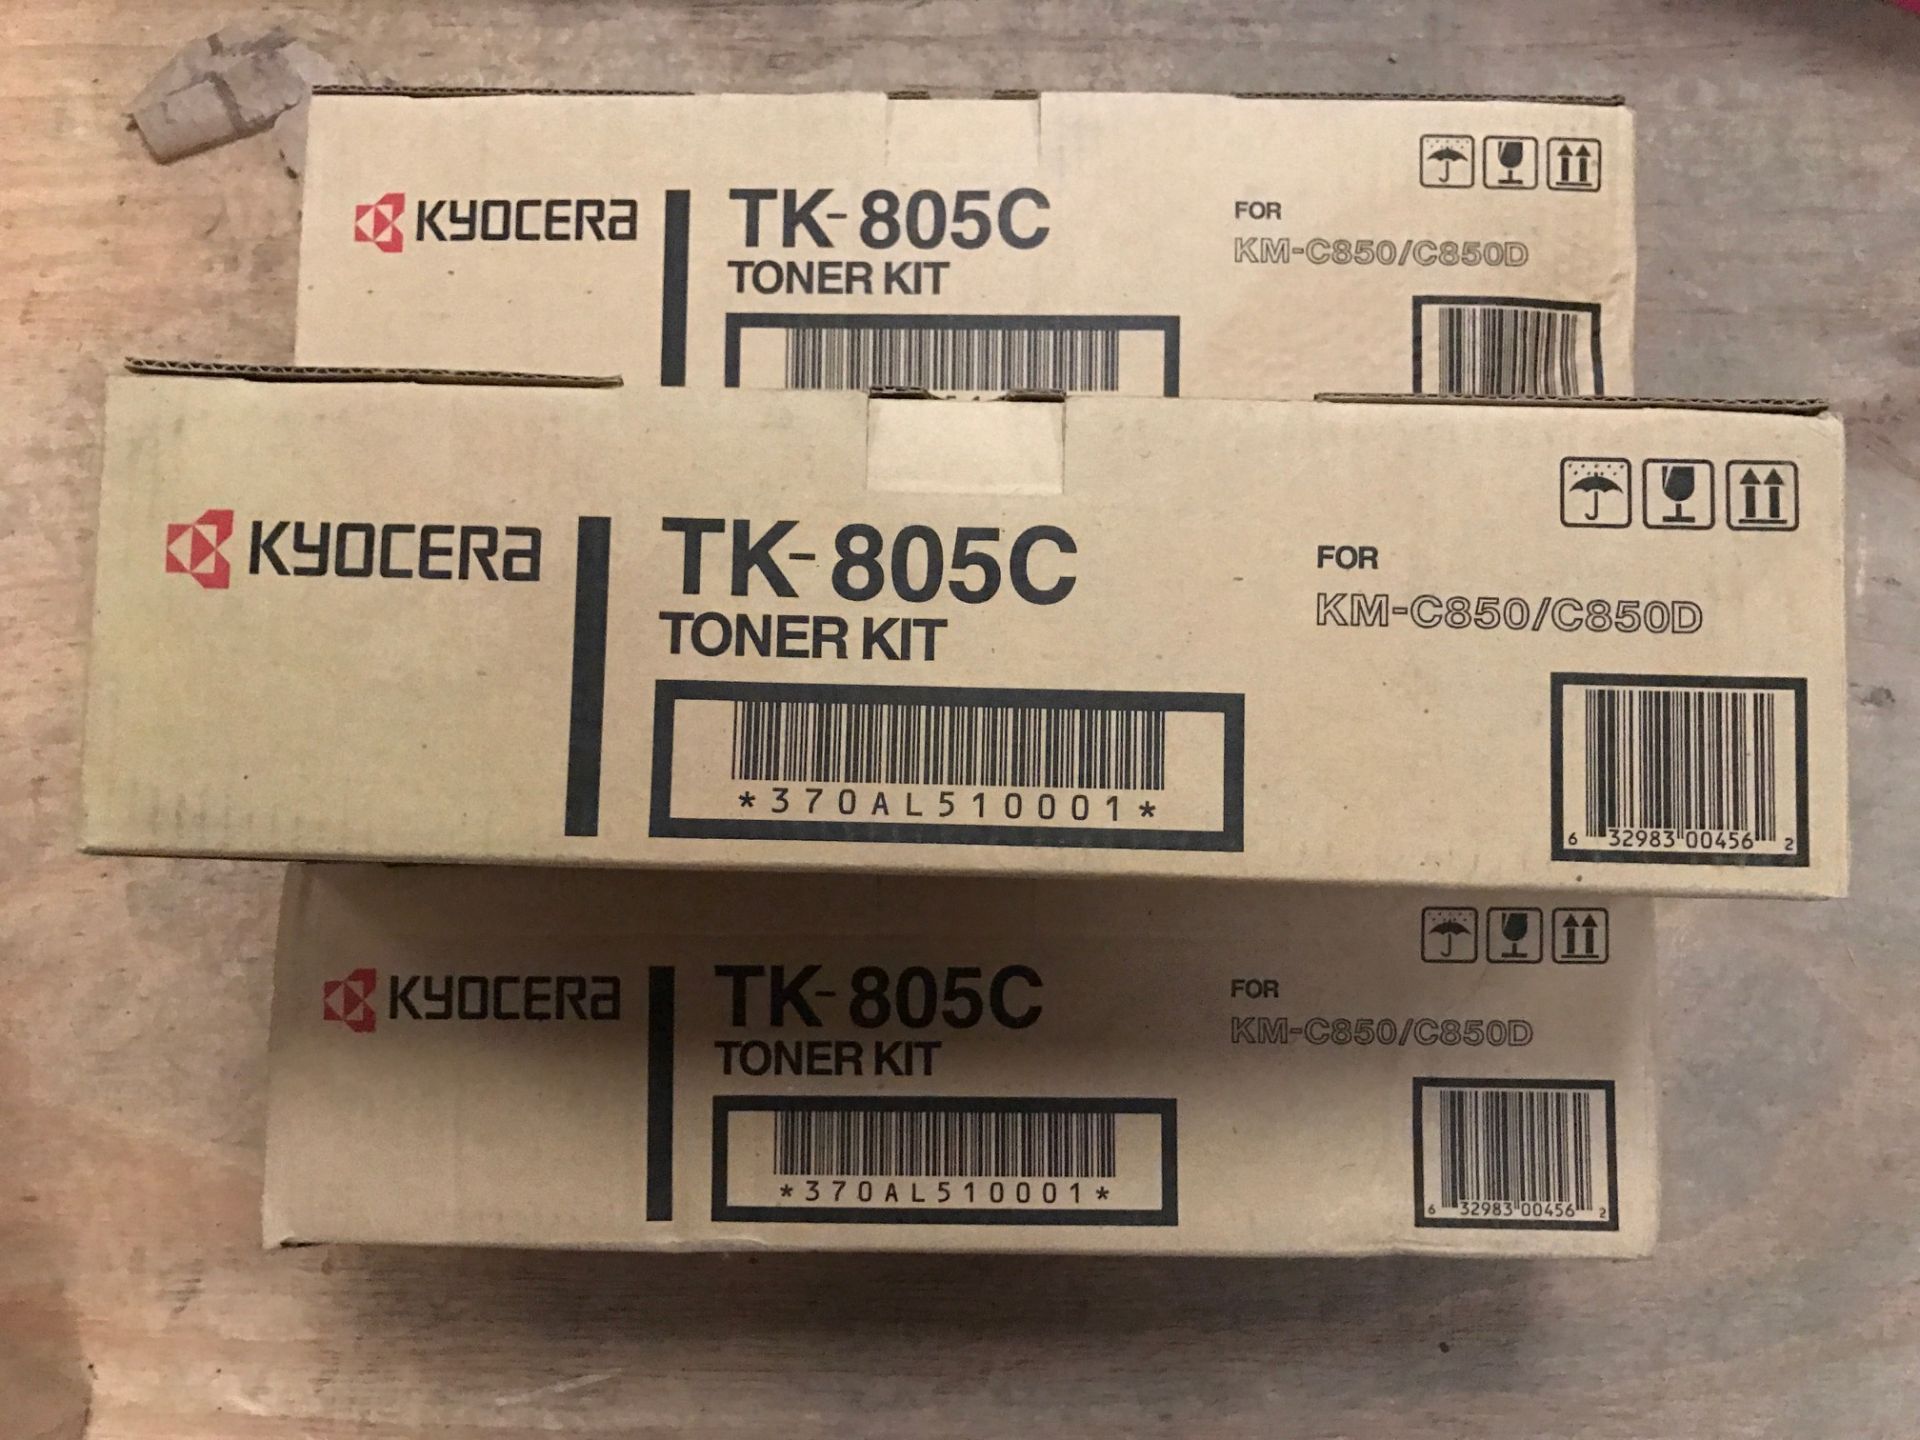 4 x Kyocera TK-805C Toner Kits, Brand New and Sealed - RRP £107.69 Each